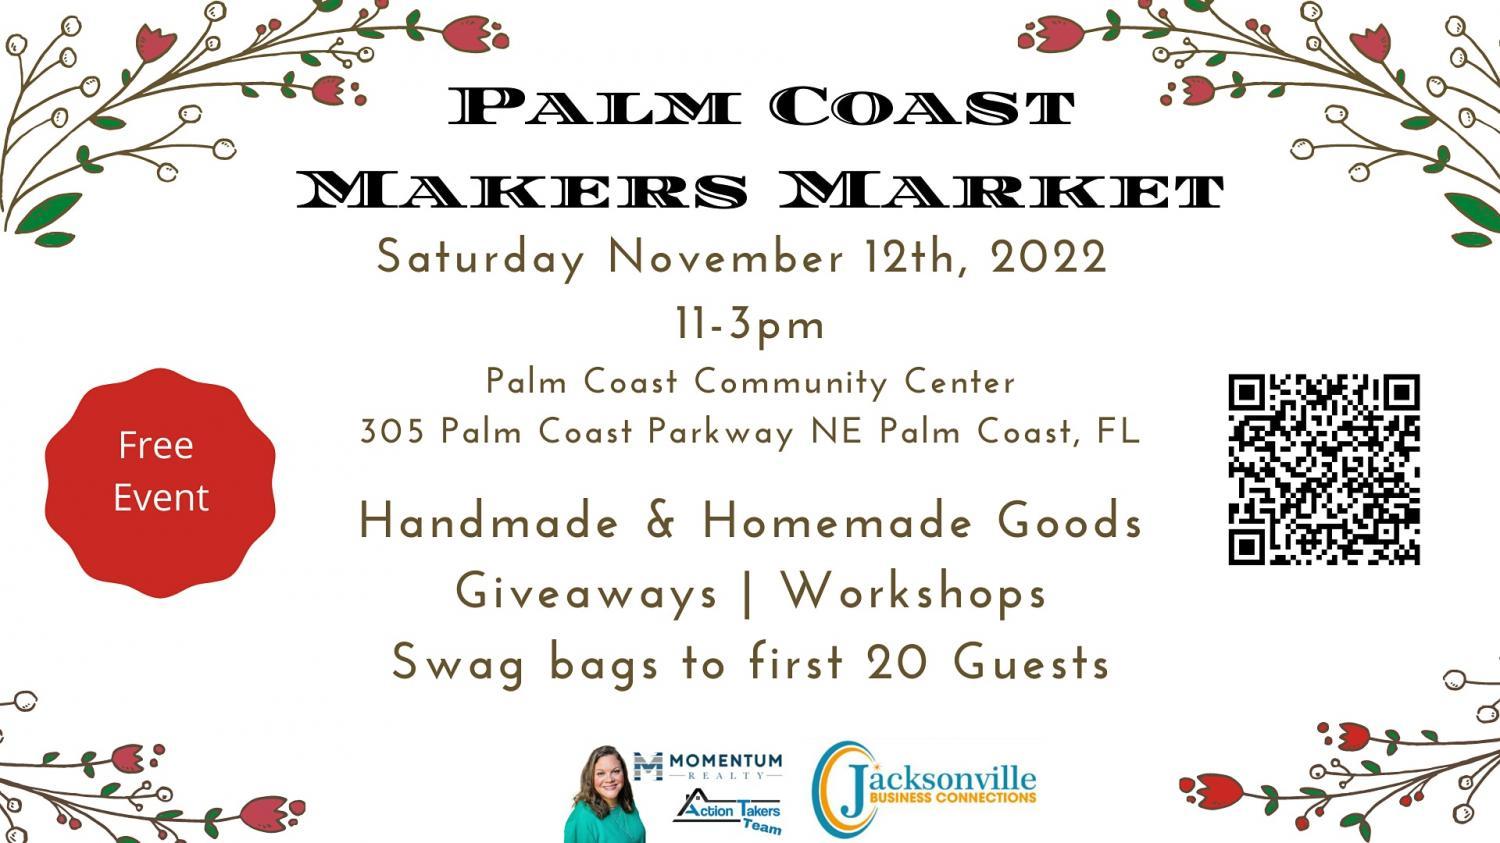 Palm Coast Makers Market
Sat Nov 12, 11:00 AM - Sat Nov 12, 3:00 PM
in 23 days